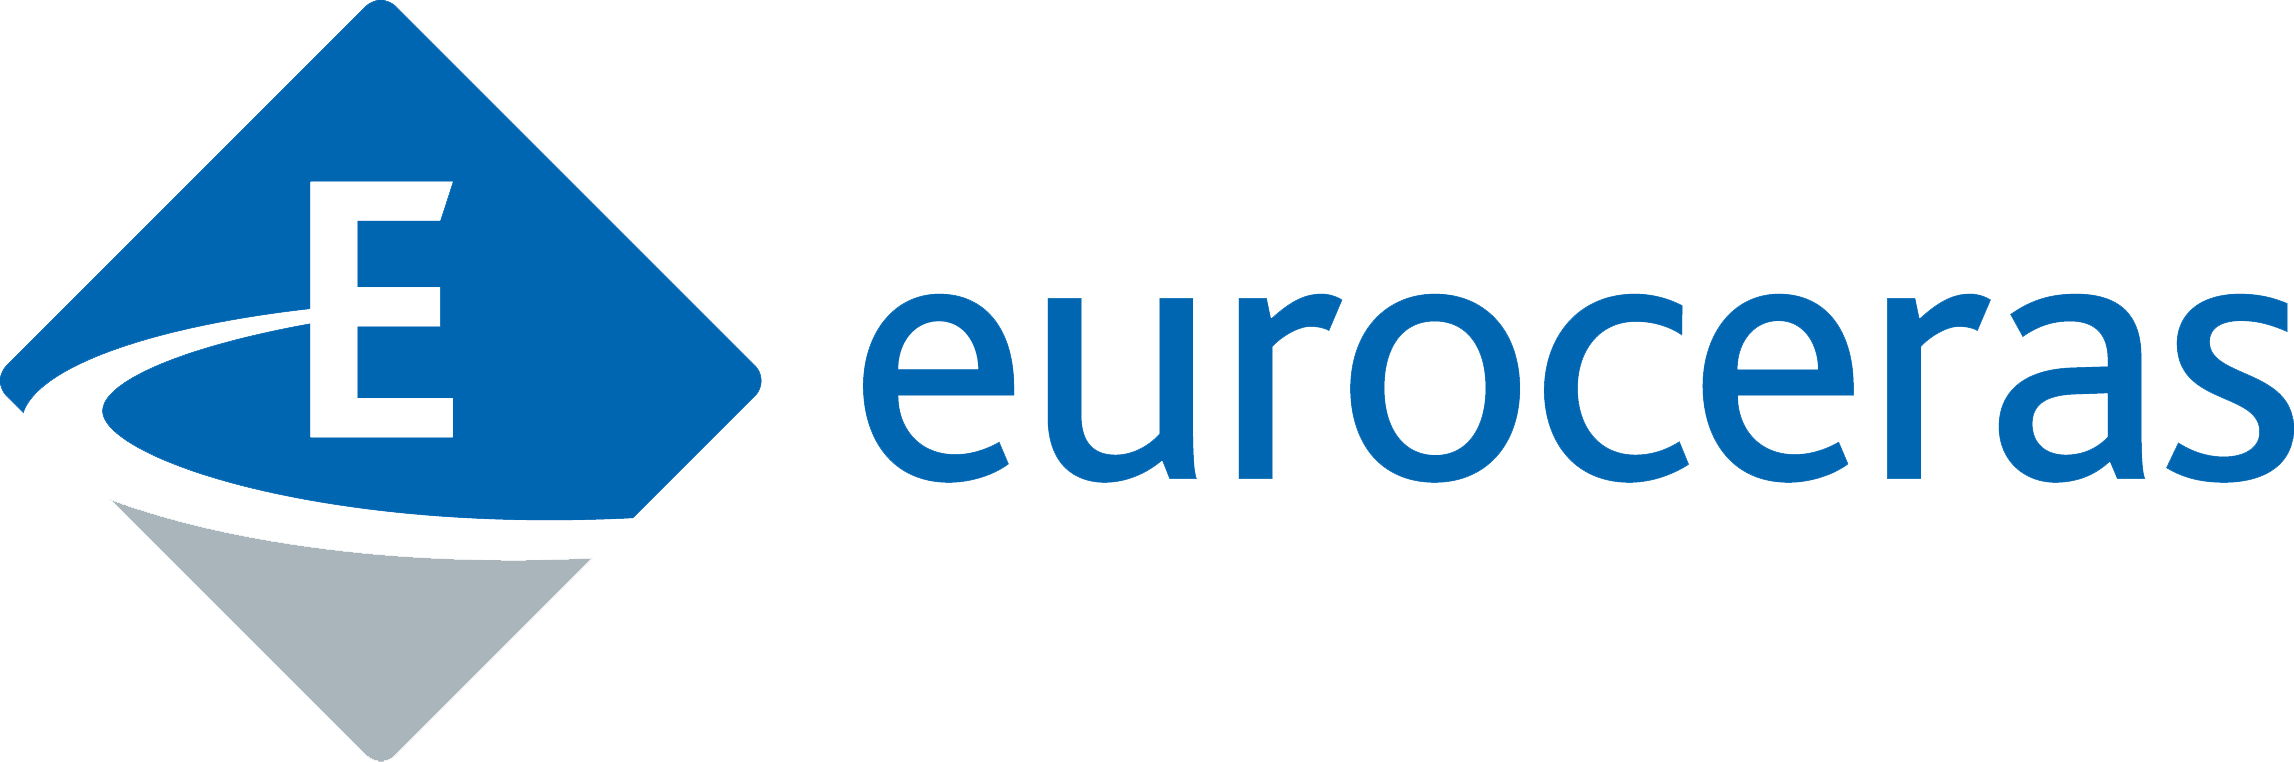 Euroceras GmbH_logo